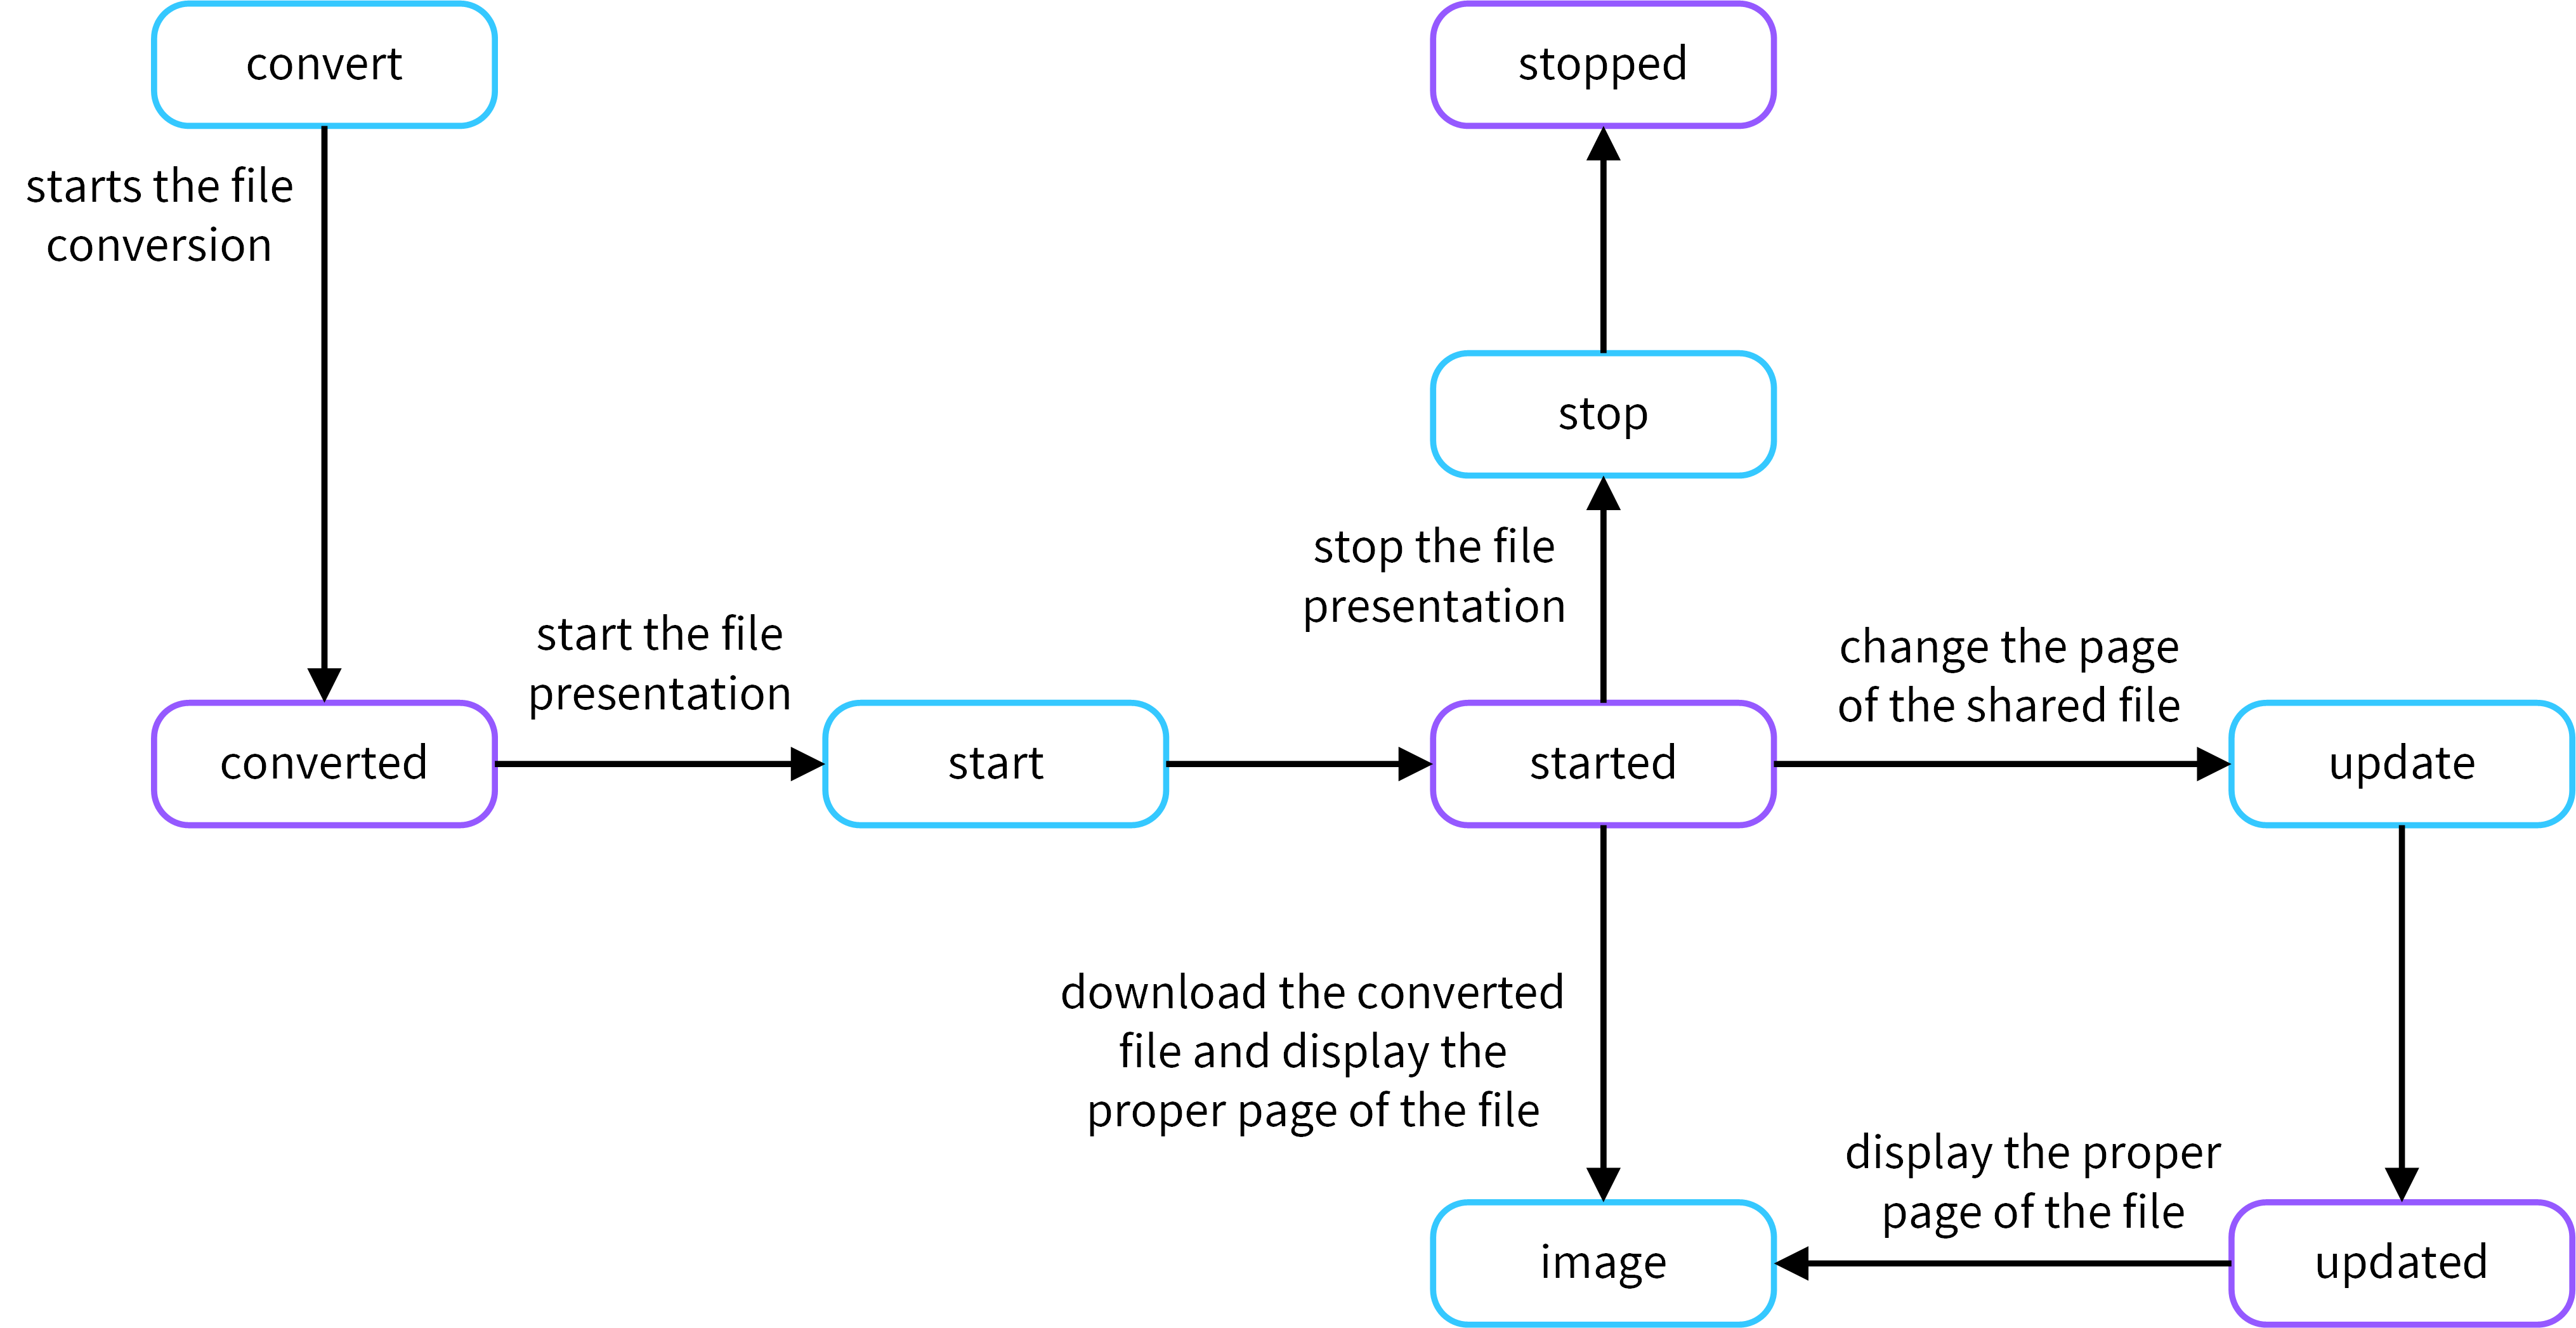 The file presentation diagram